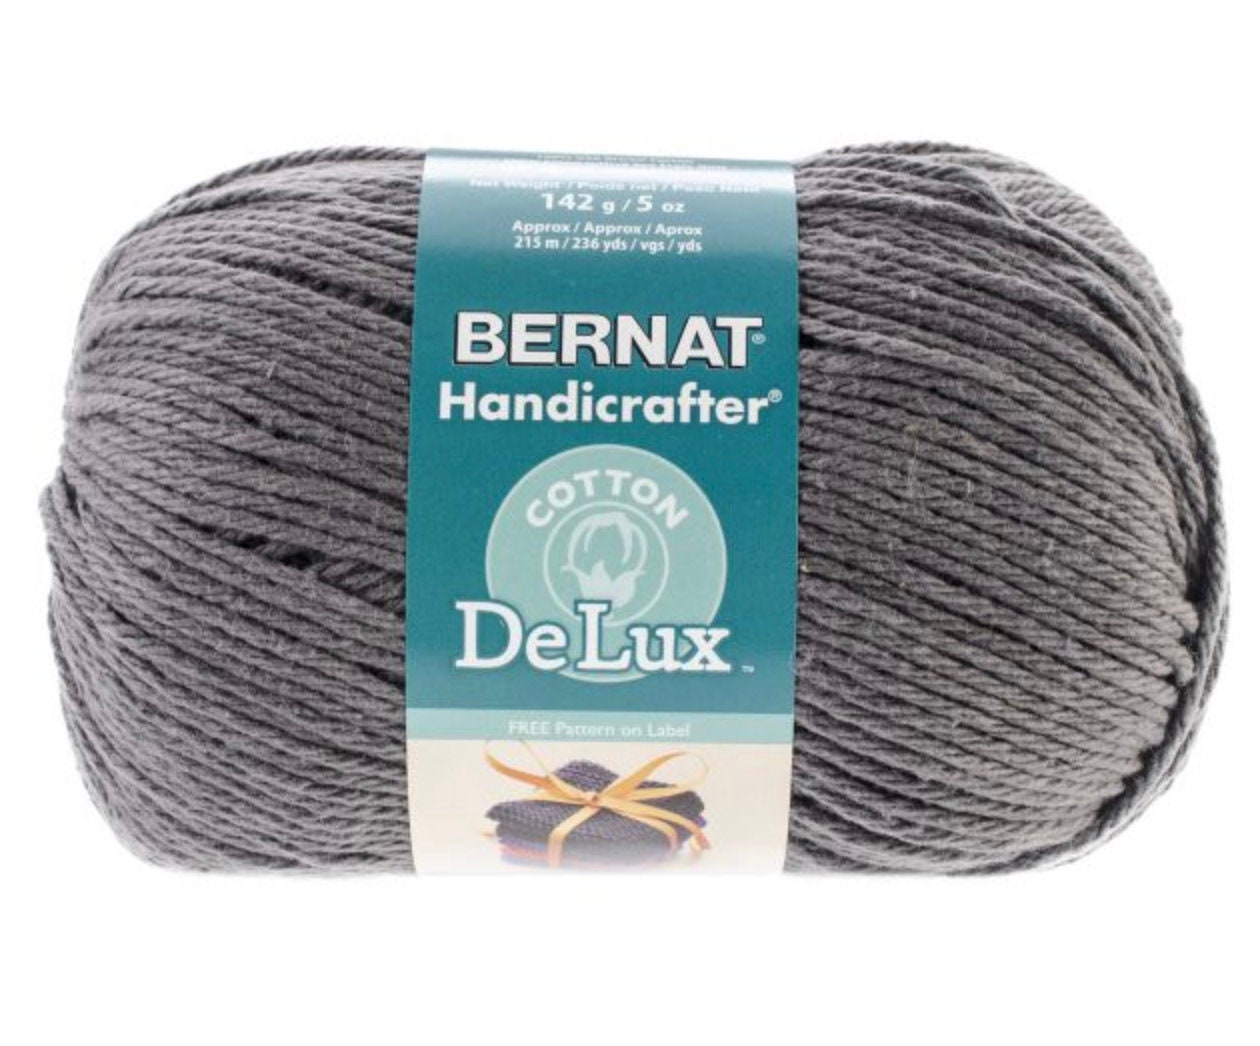 Bernat Handicrafter Cotton Ombres Yarn - Anchors Away